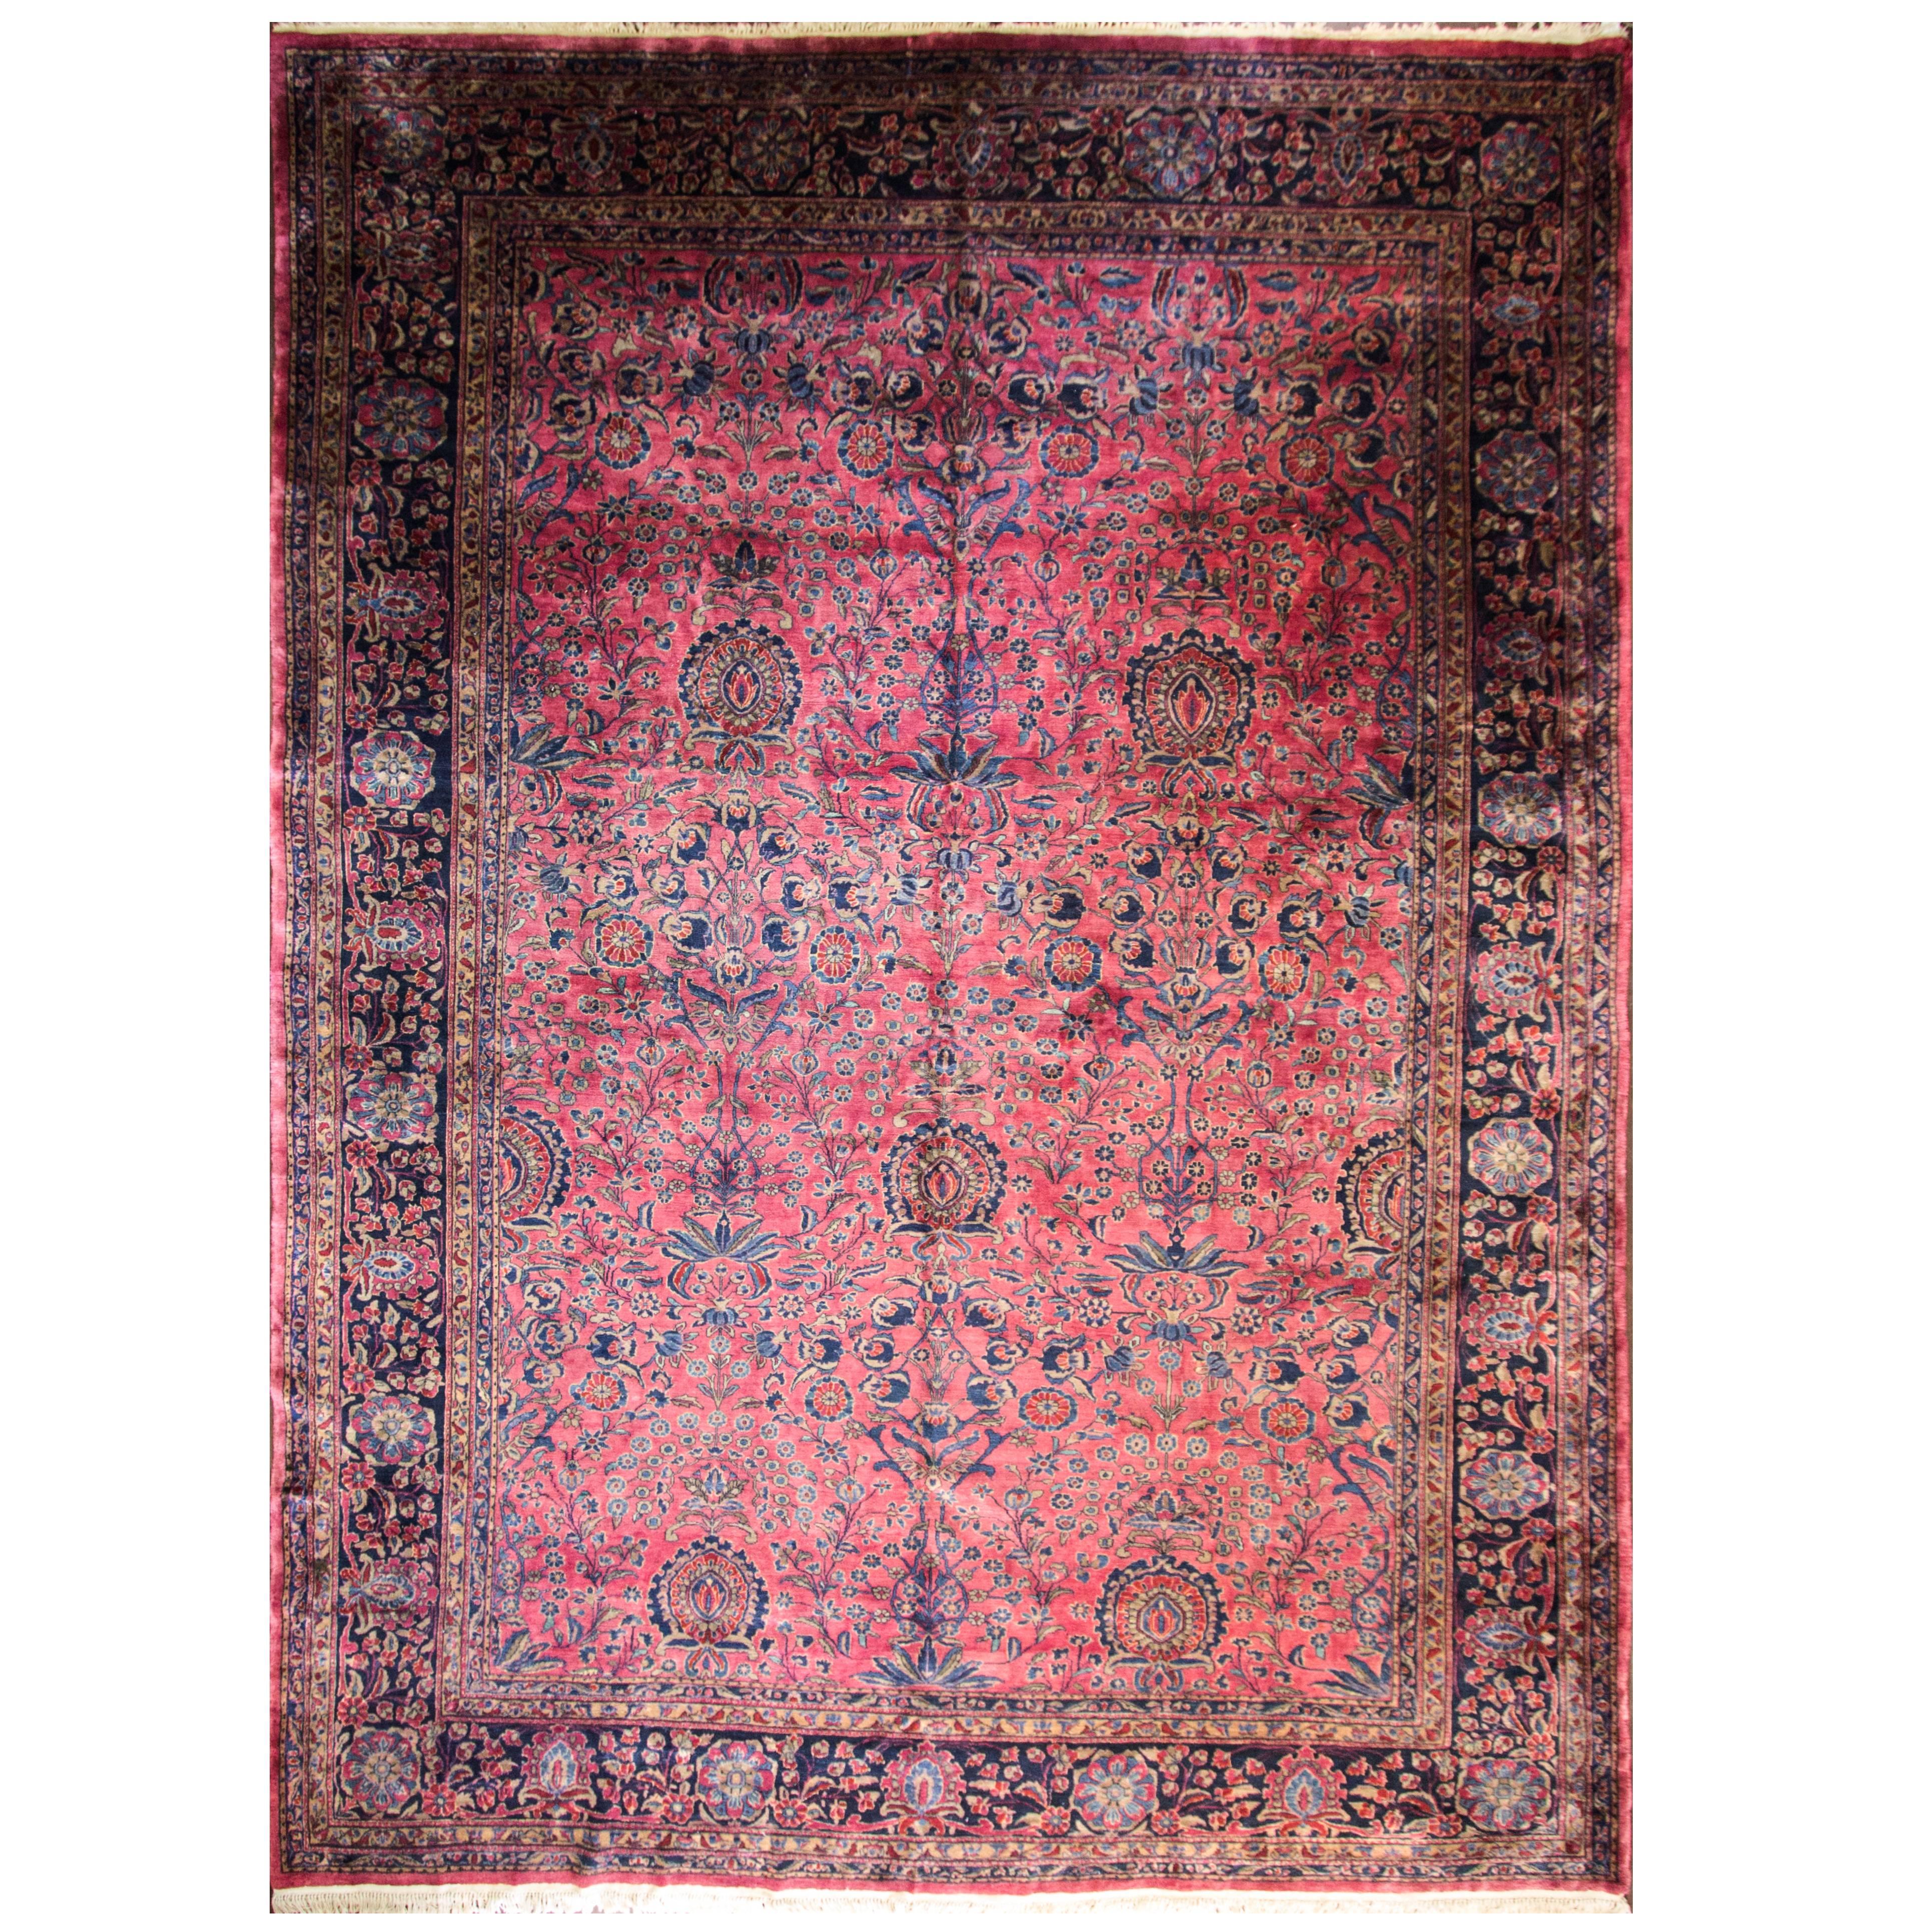  Antique Persian Mohajeran Sarouk Carpet,  11'8" x 16'3" For Sale